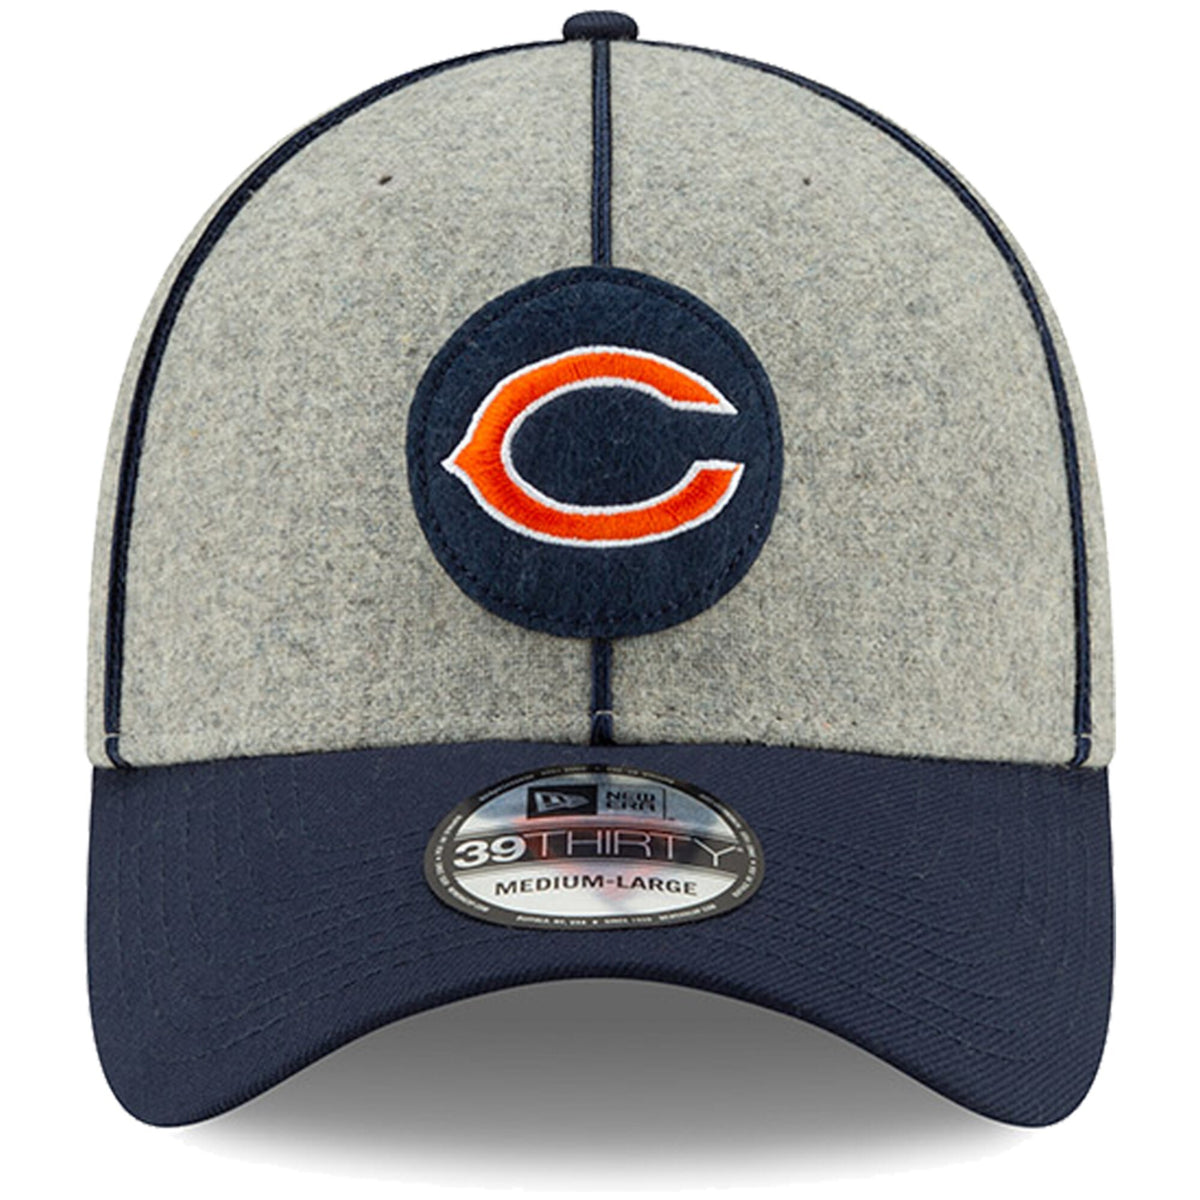 Men's New Era Black Chicago Cubs Logo 39THIRTY Flex Hat Size: Medium/Large